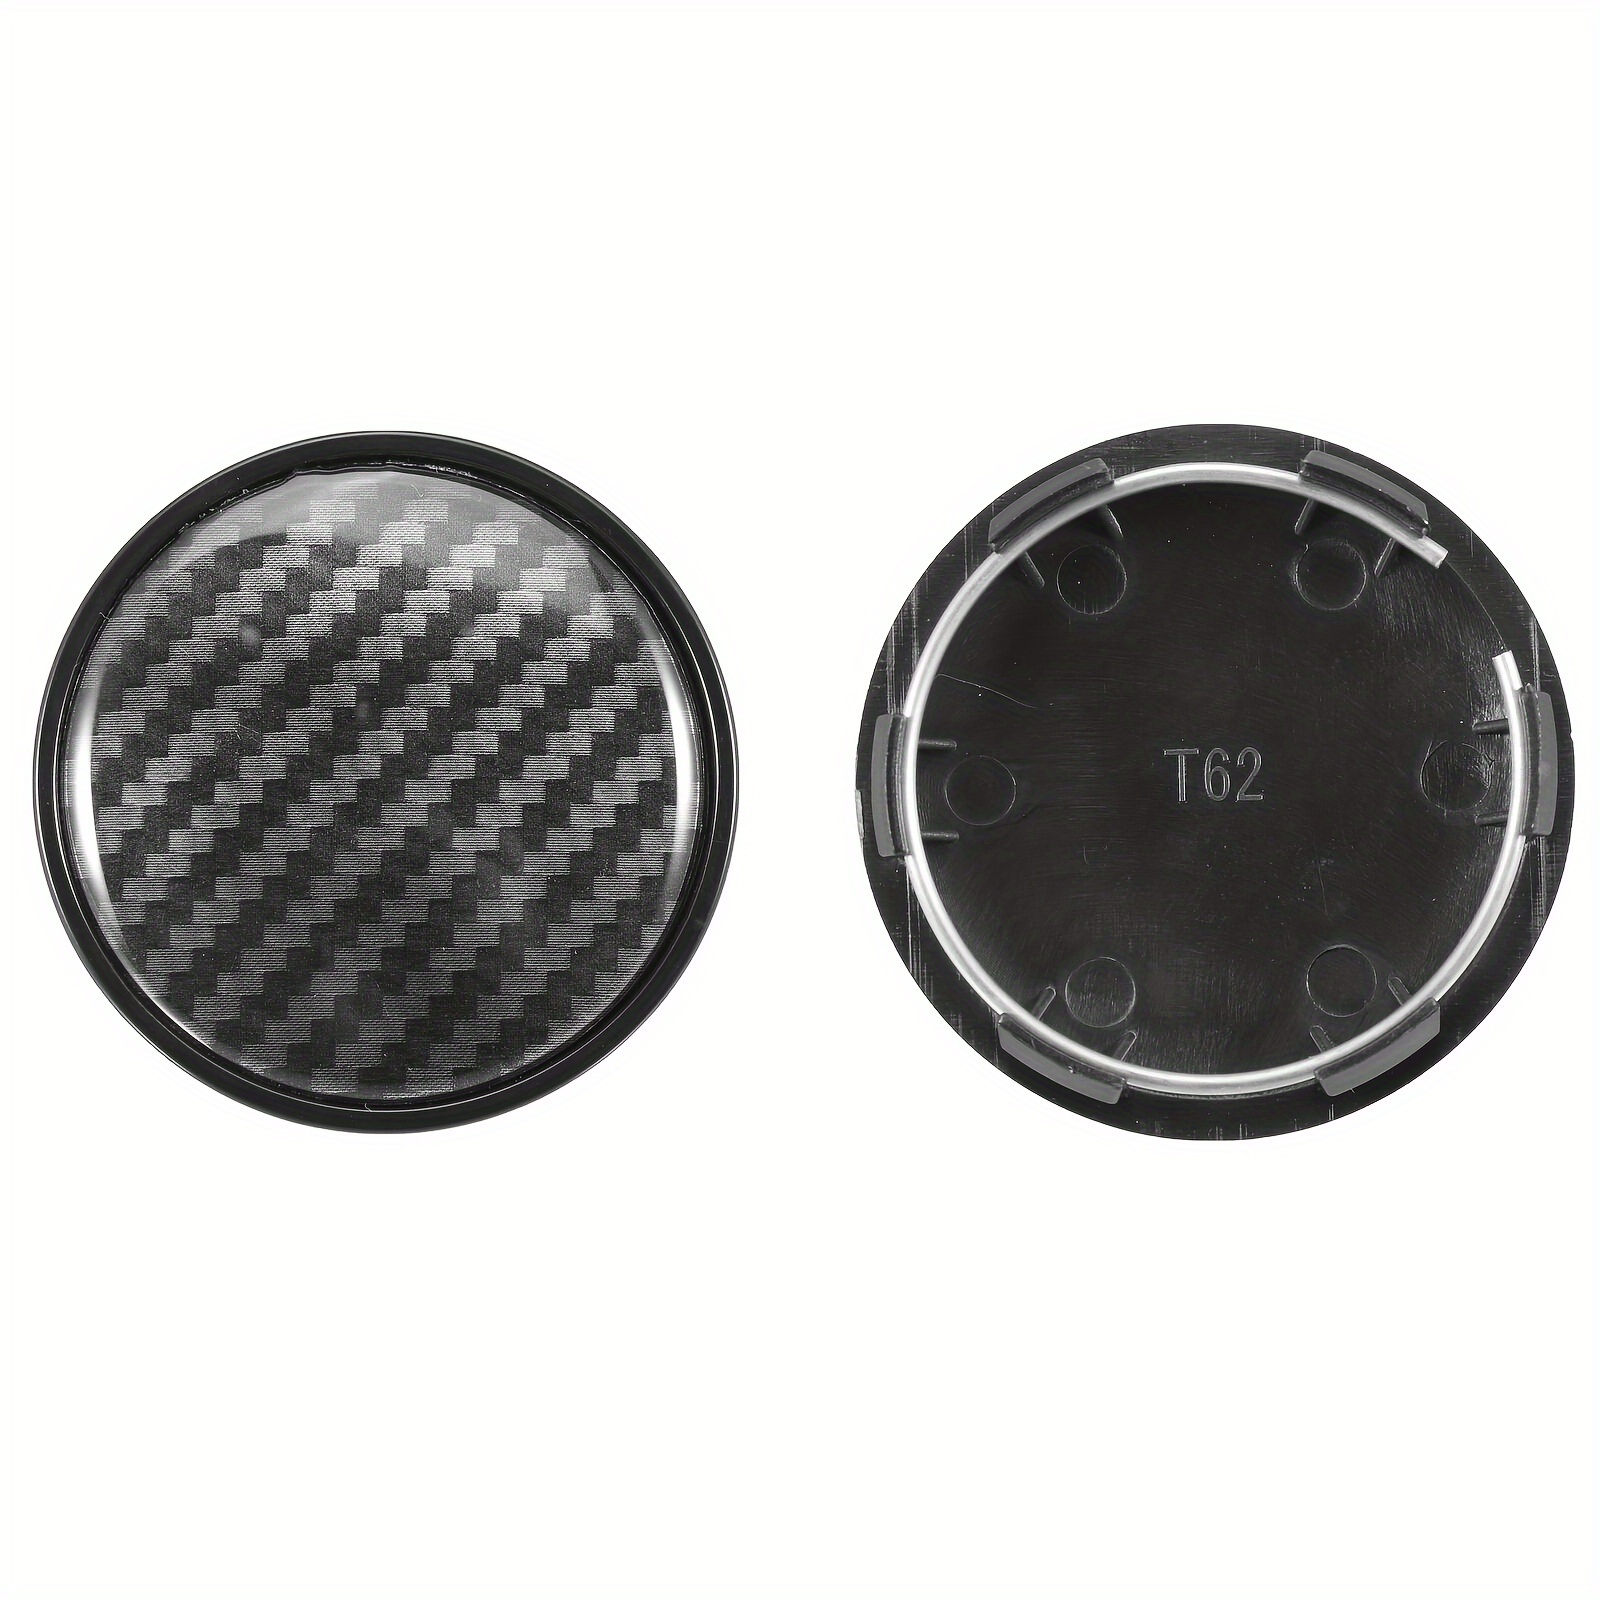 4pcs 58mm 62mm wheel center hub caps hubcaps covers universal for car black